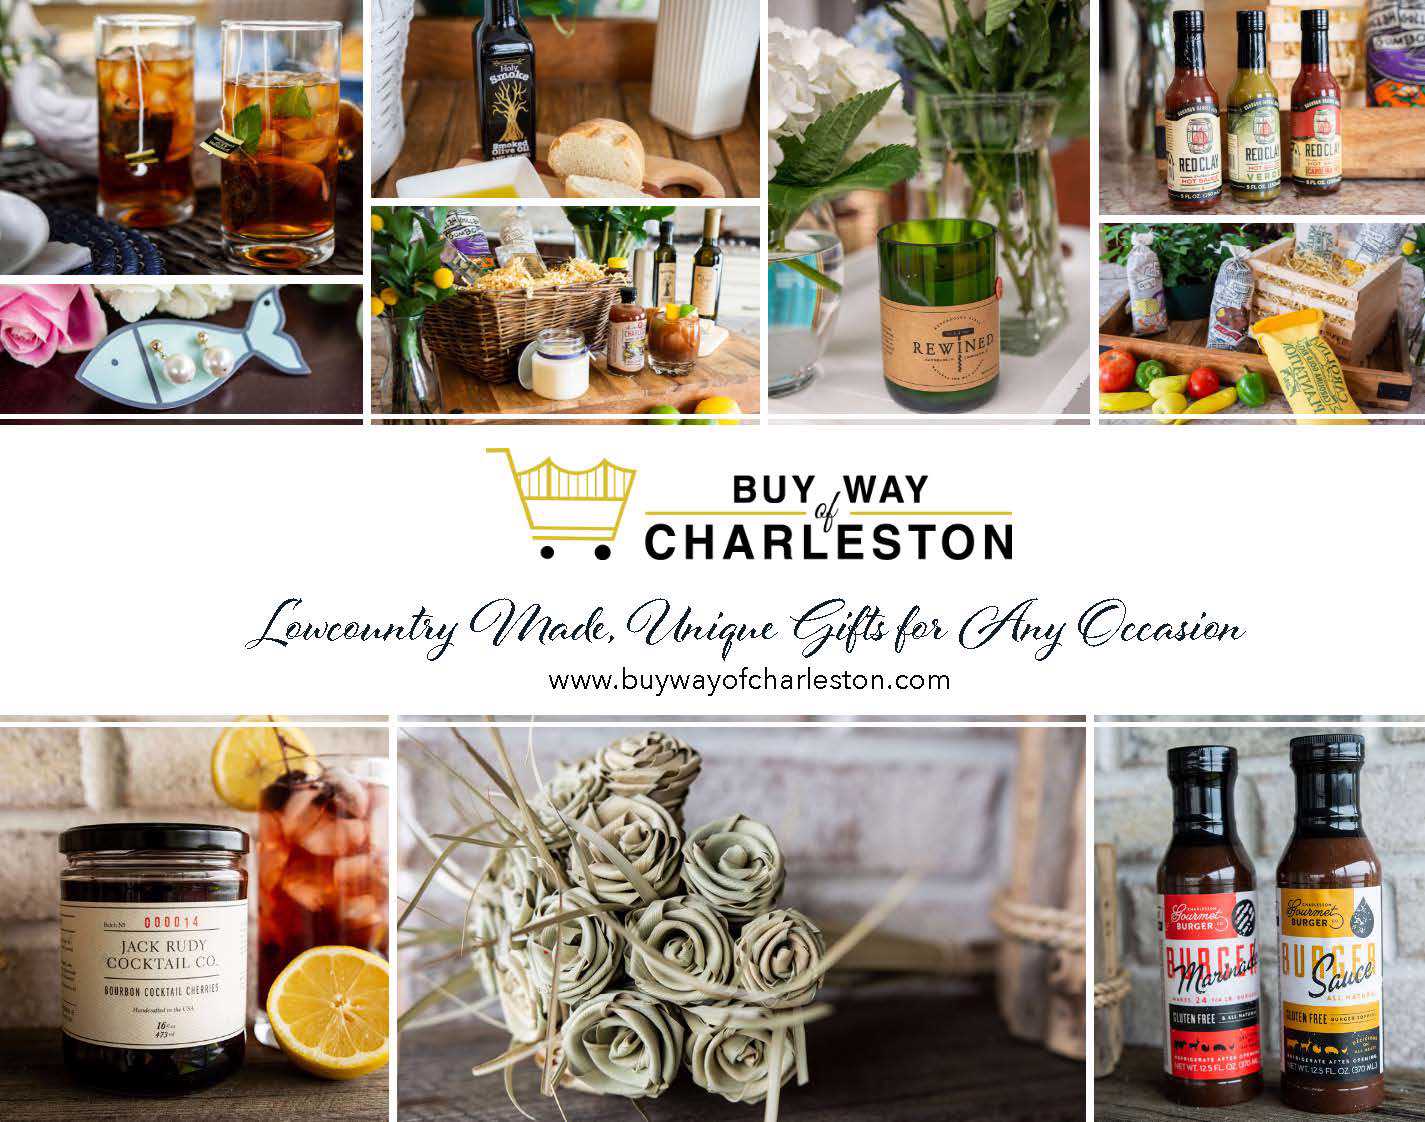 Buy Way of Charleston Ad